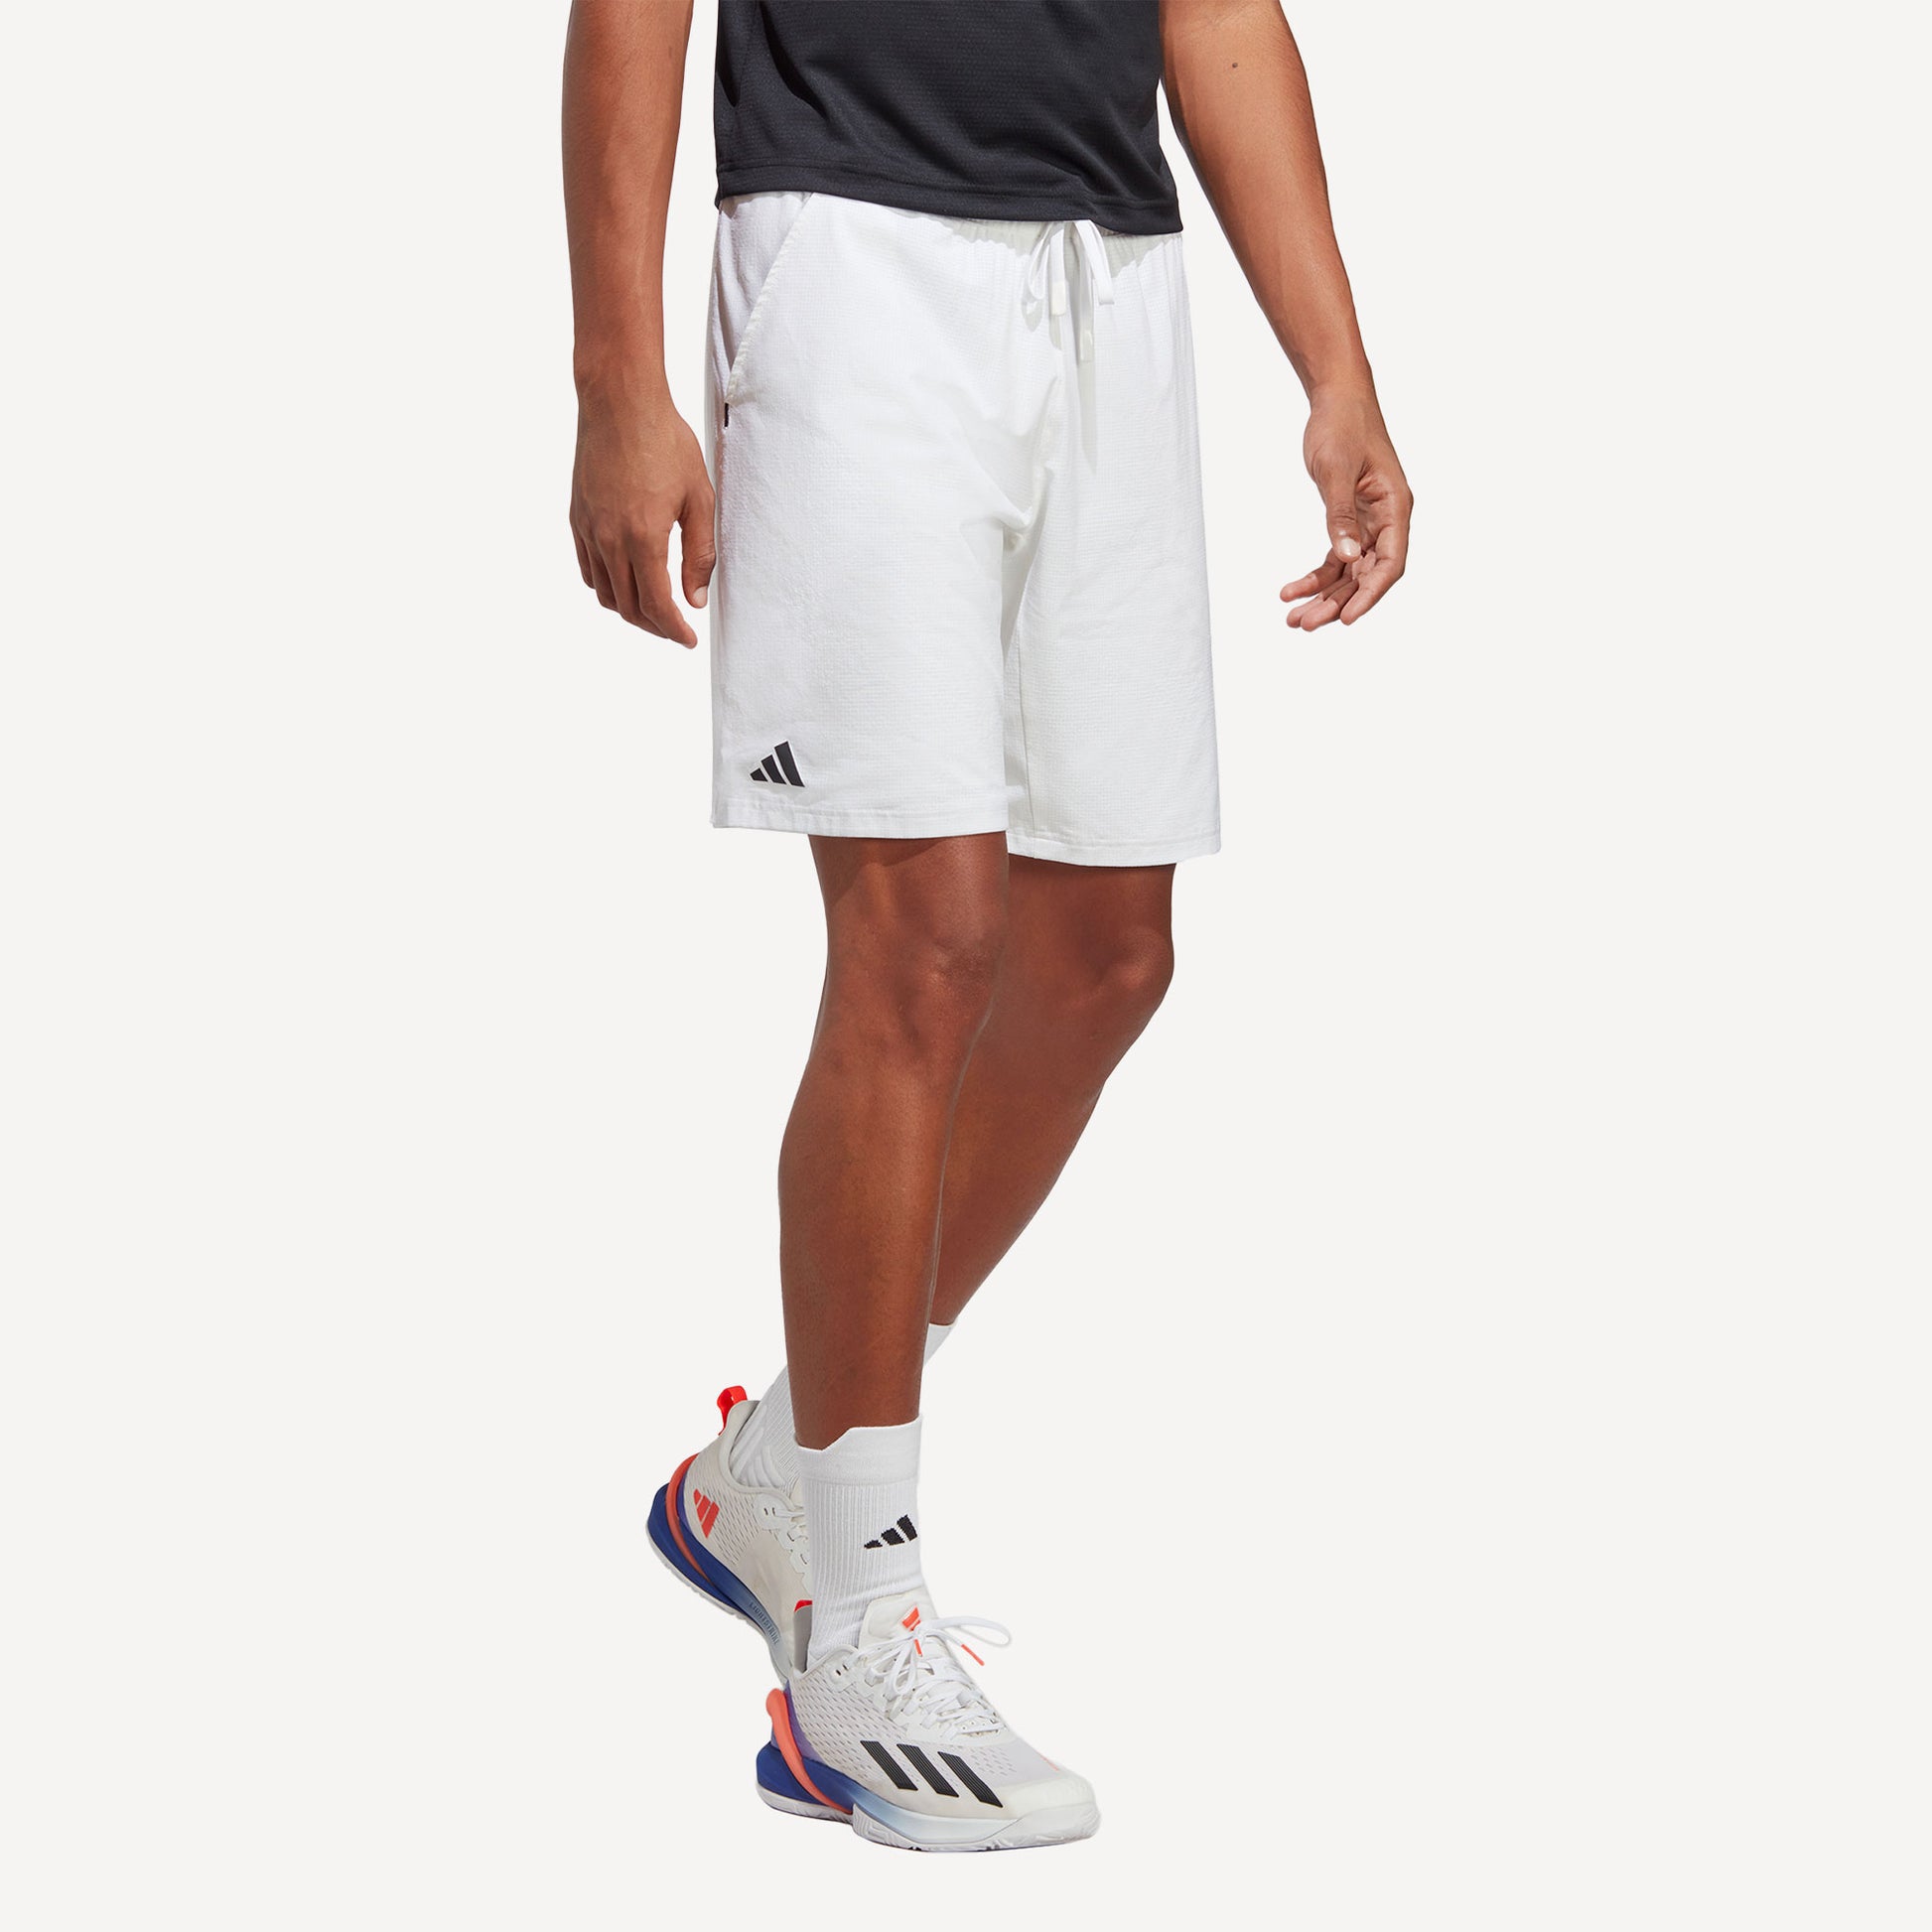 adidas Ergo Men's 7-Inch Tennis Shorts White (1)